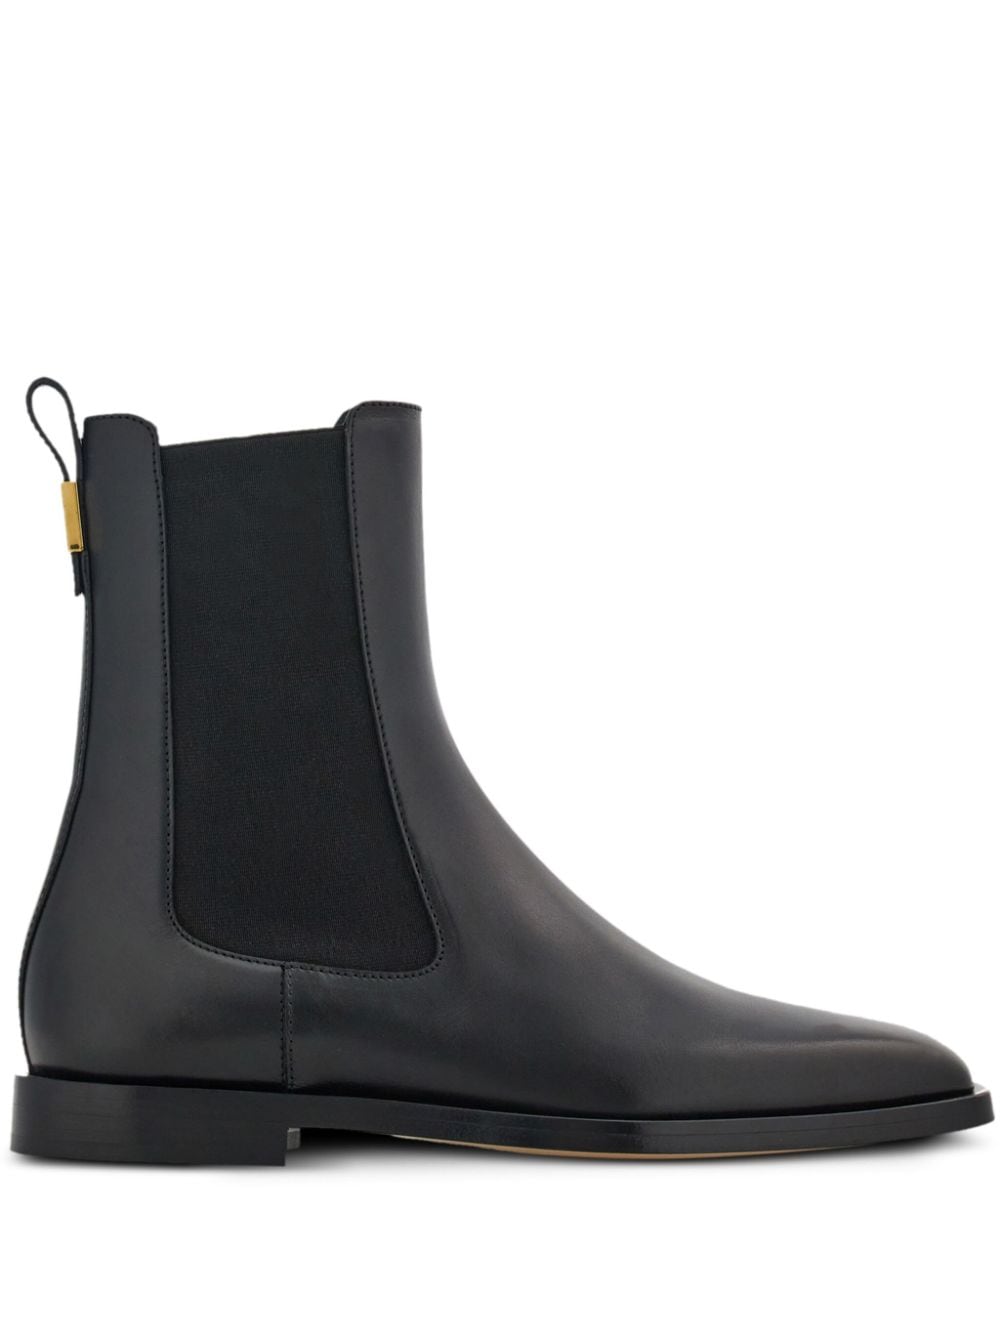 Ferragamo Chelsea leather ankle boots - Black